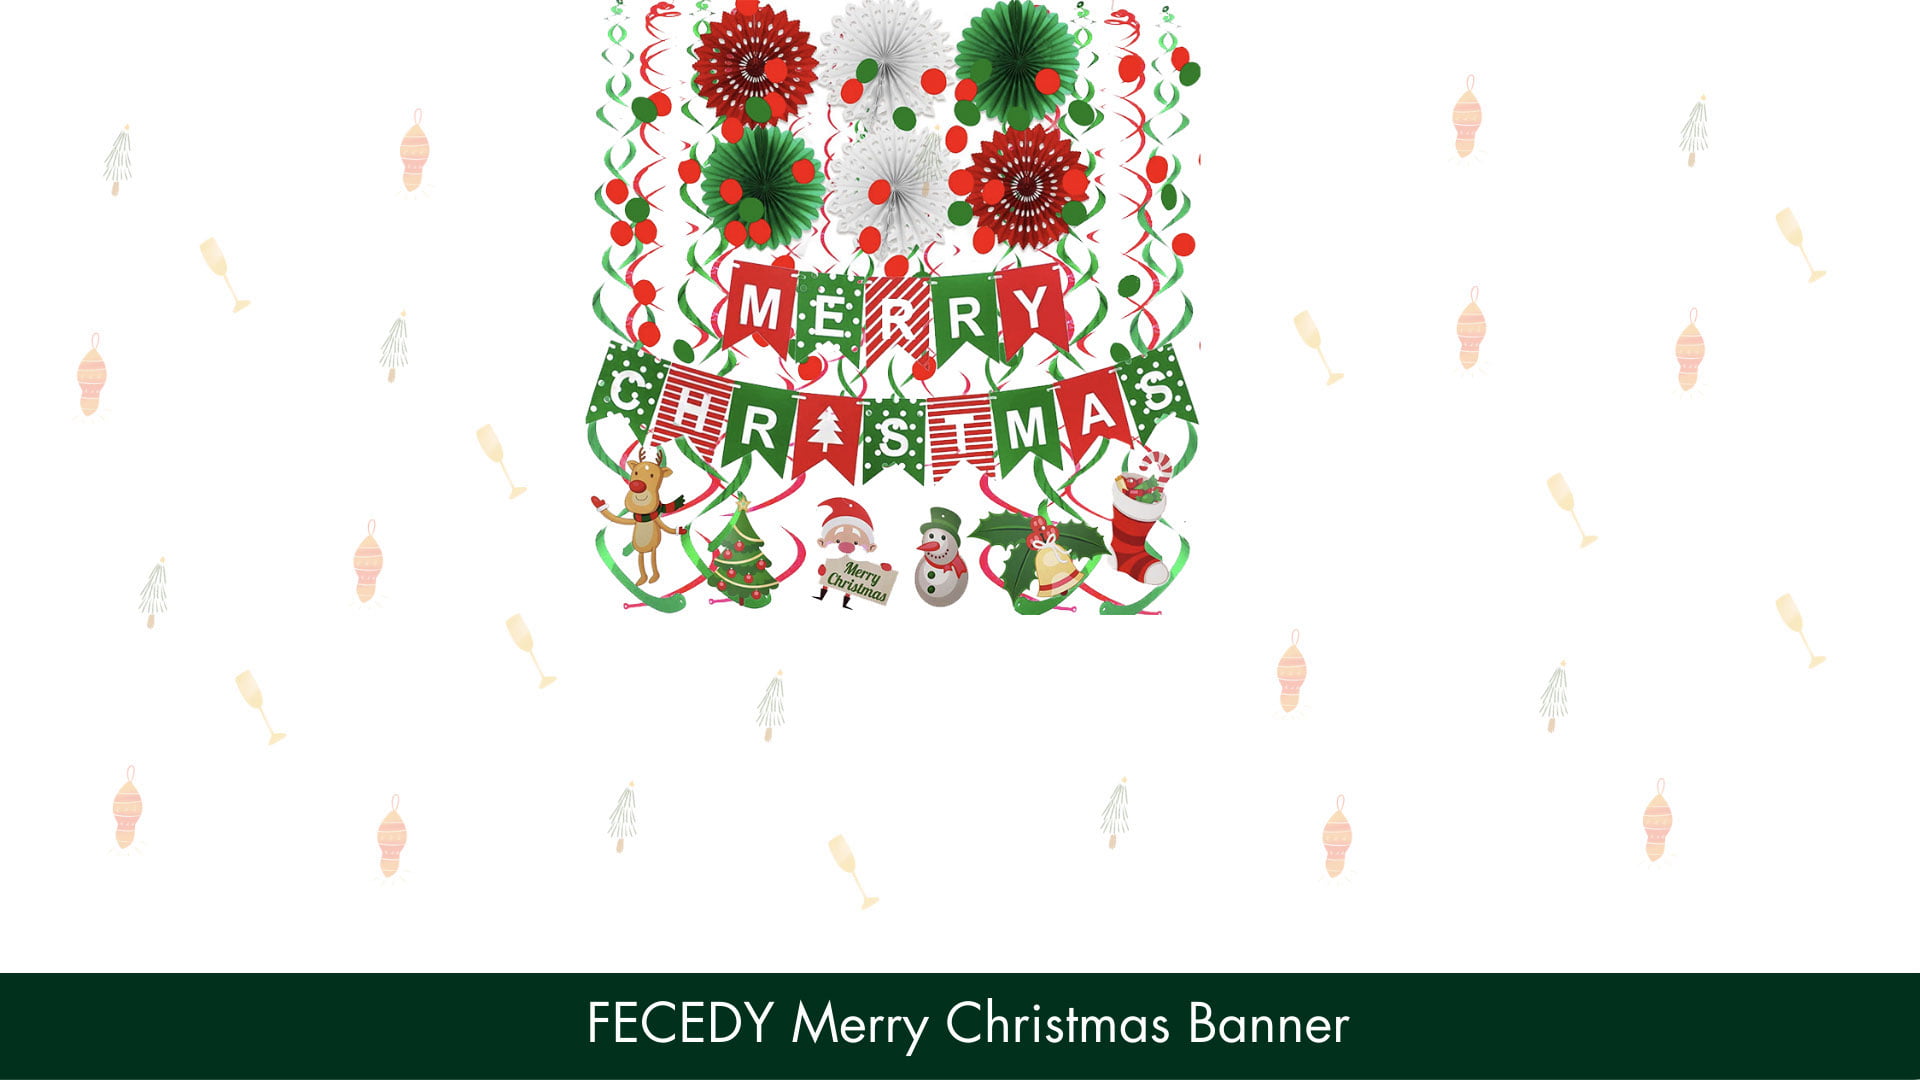 FECEDY Merry Christmas Banner